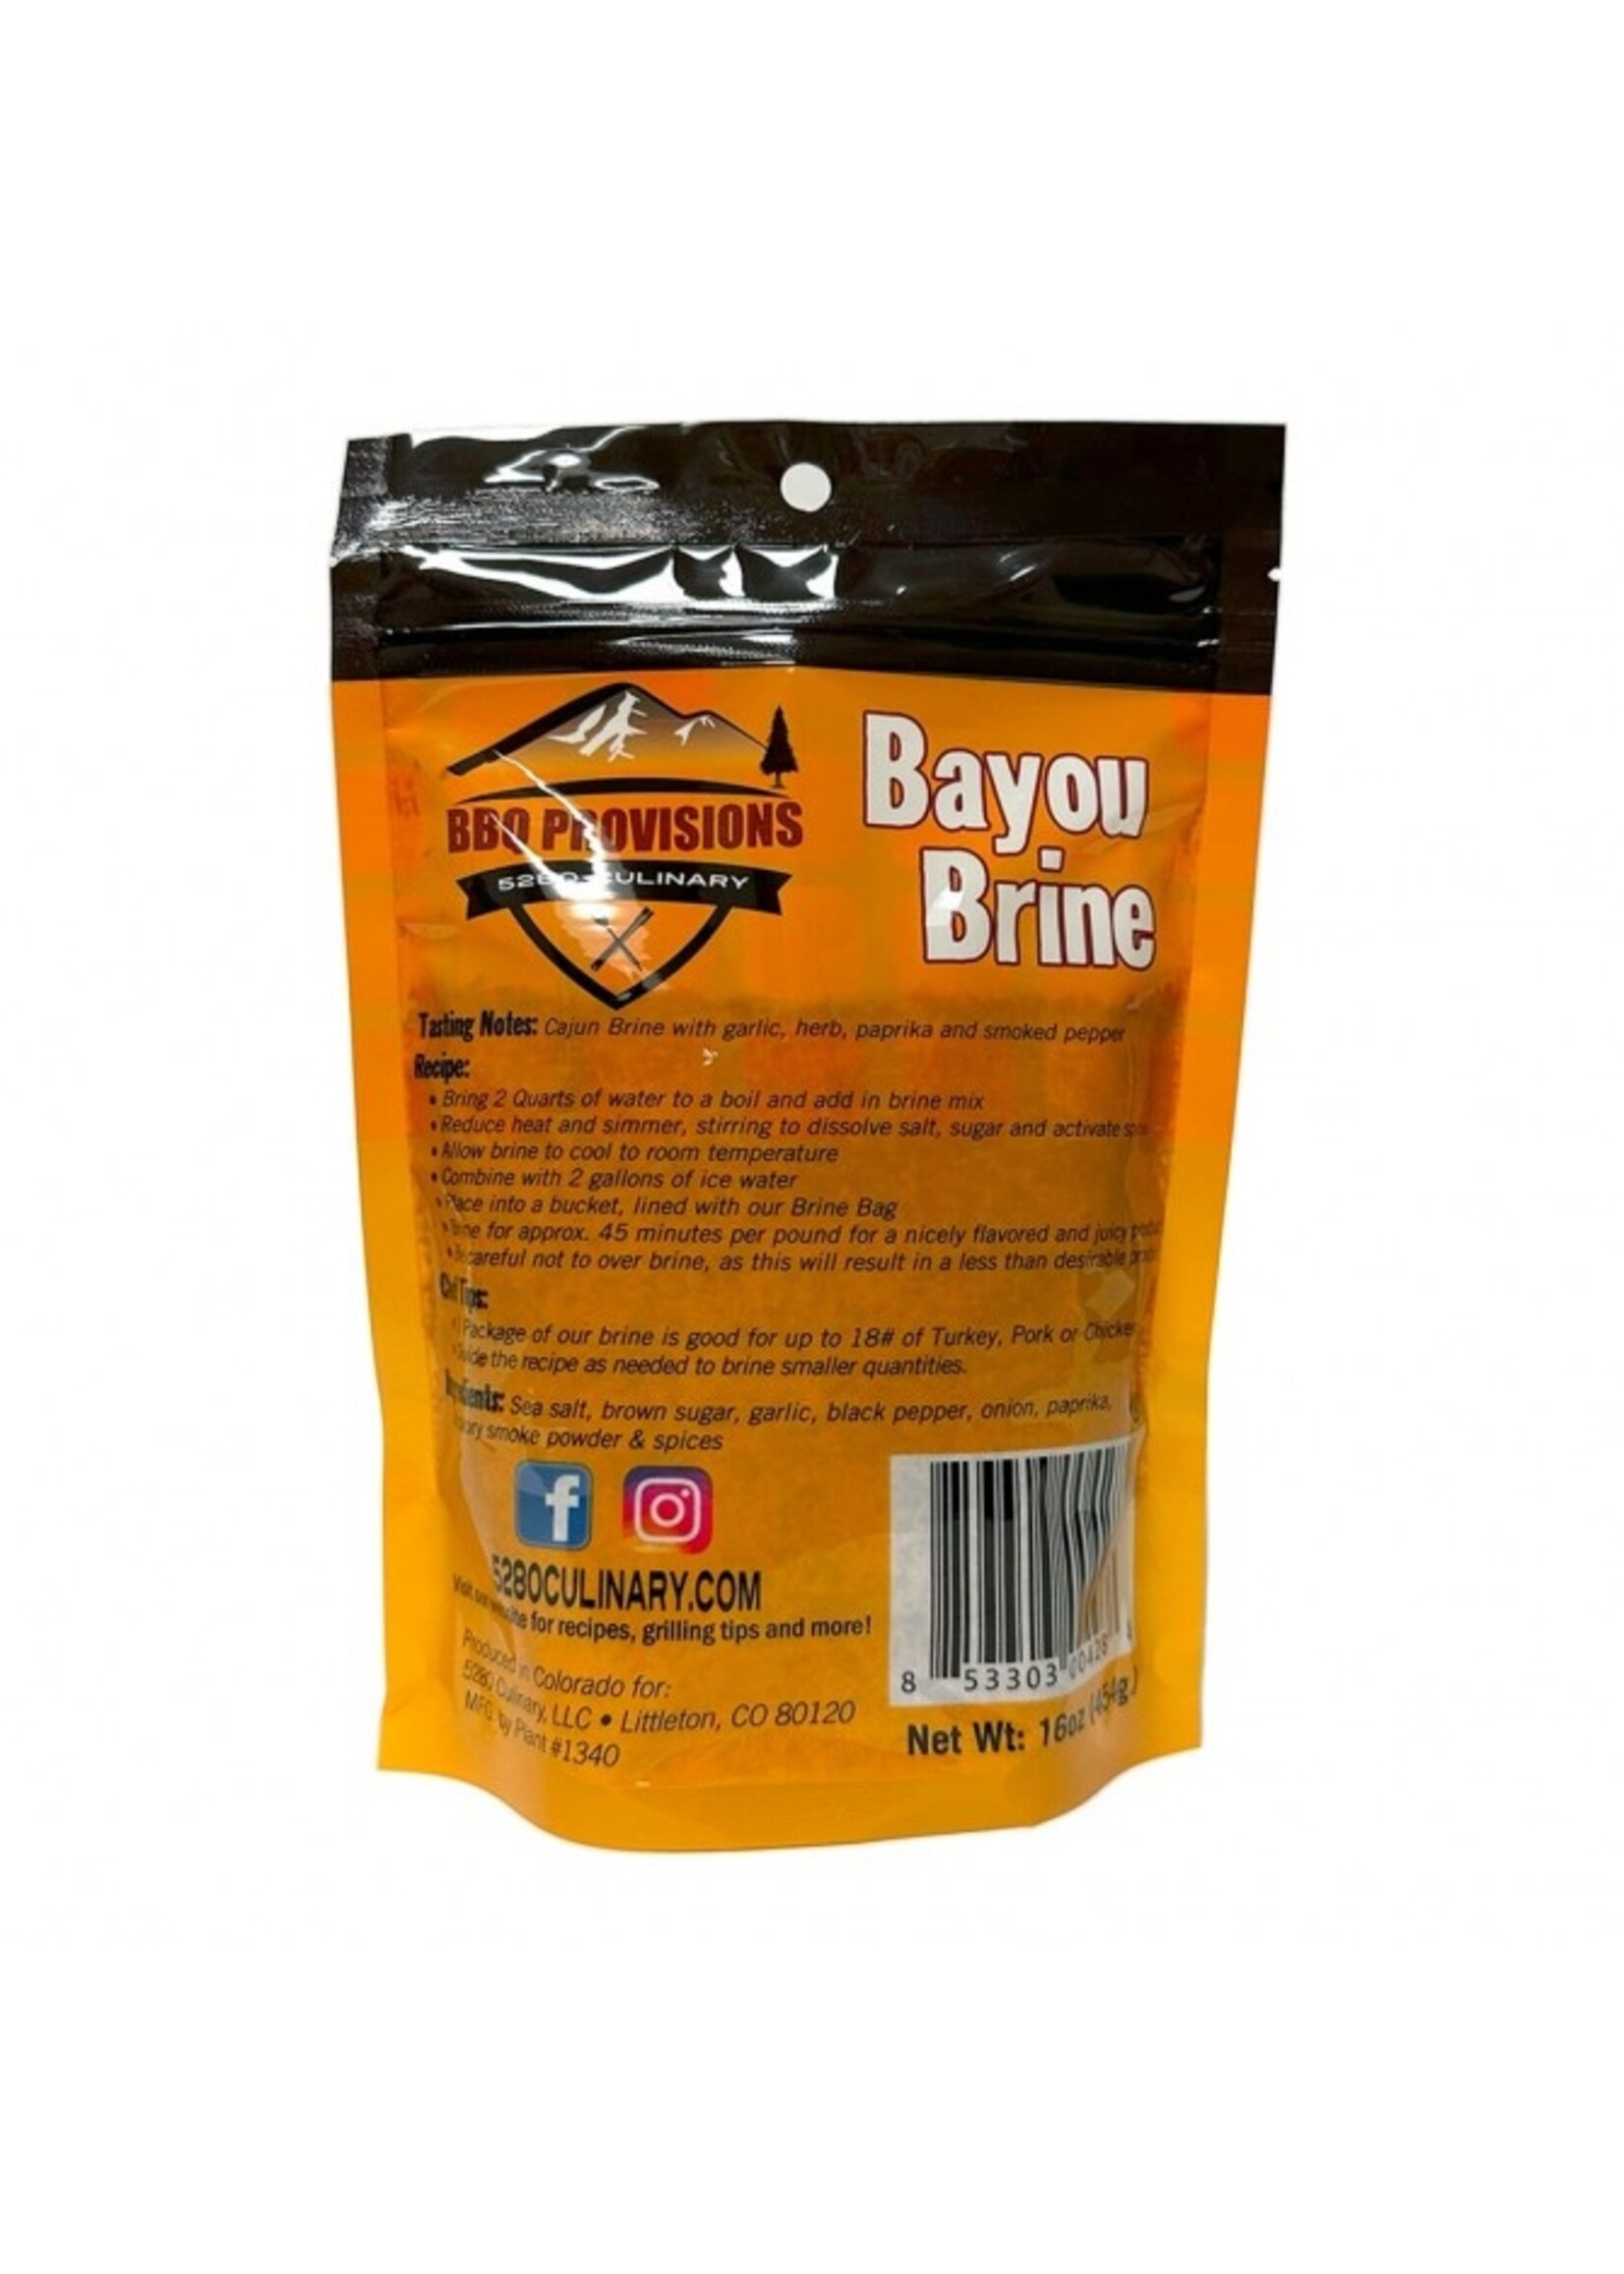 5280 Culinary BBQ Provisions Bayou Brine